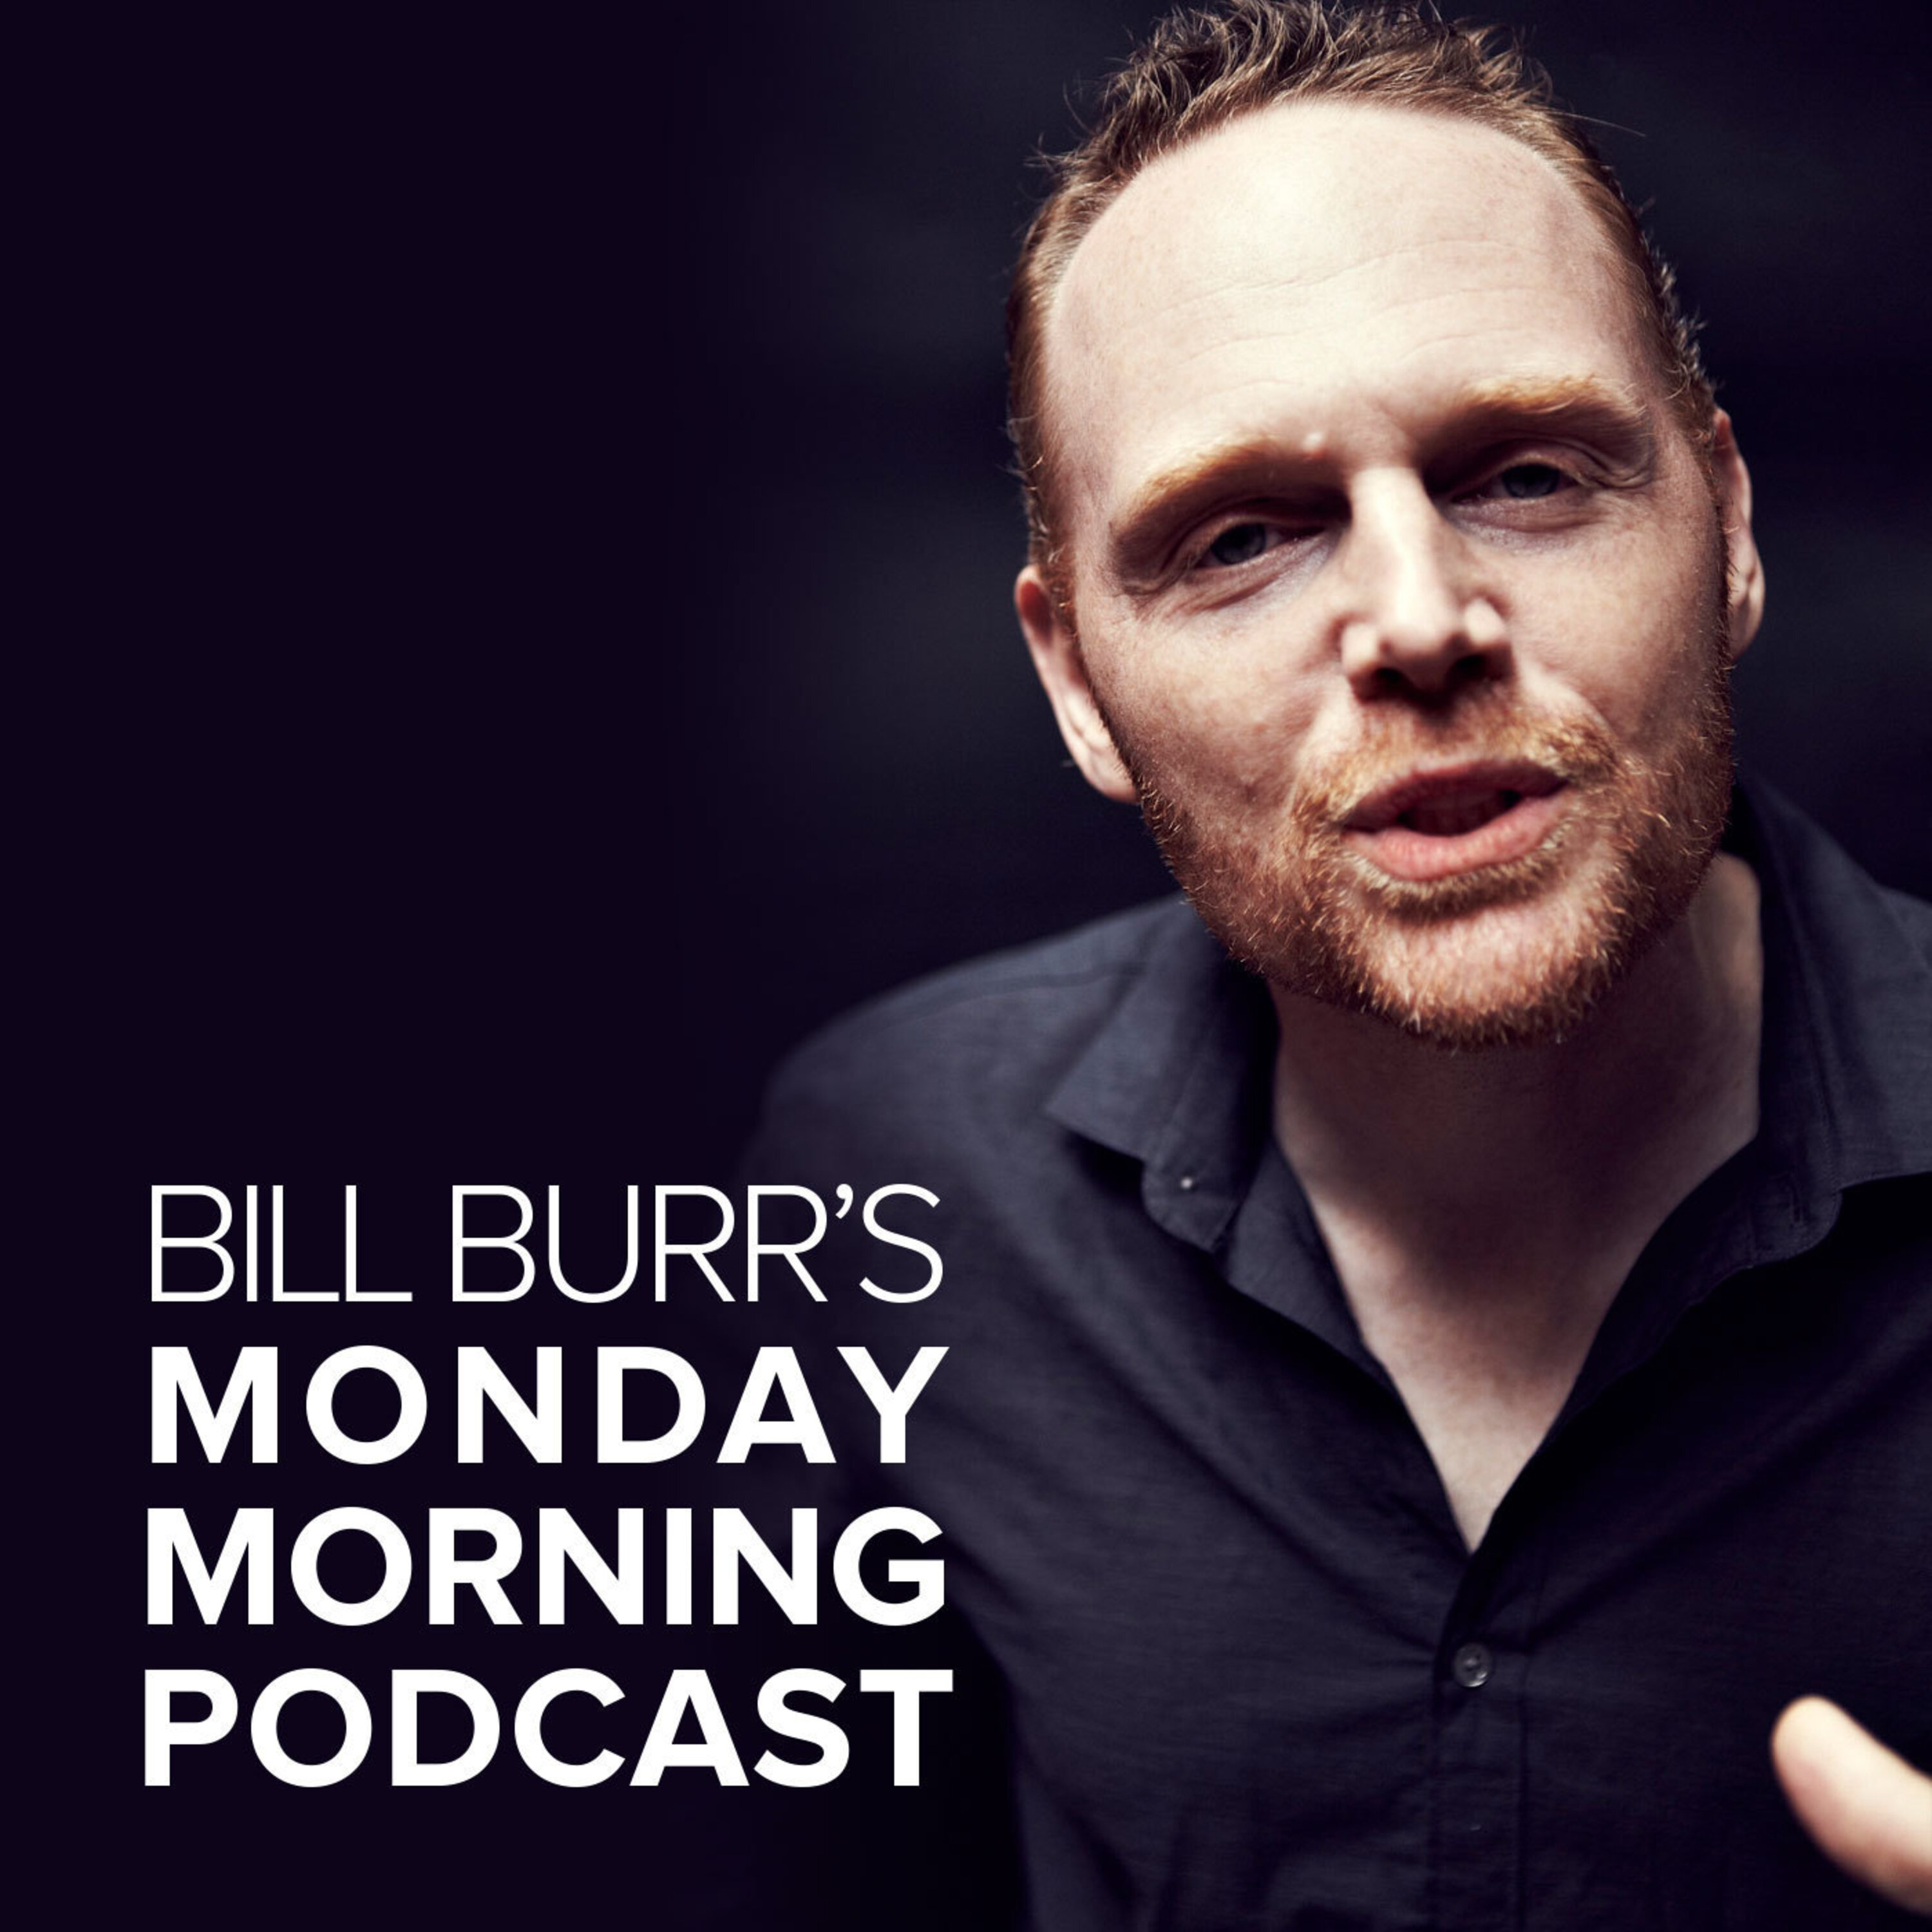 Monday Morning Podcast podcast